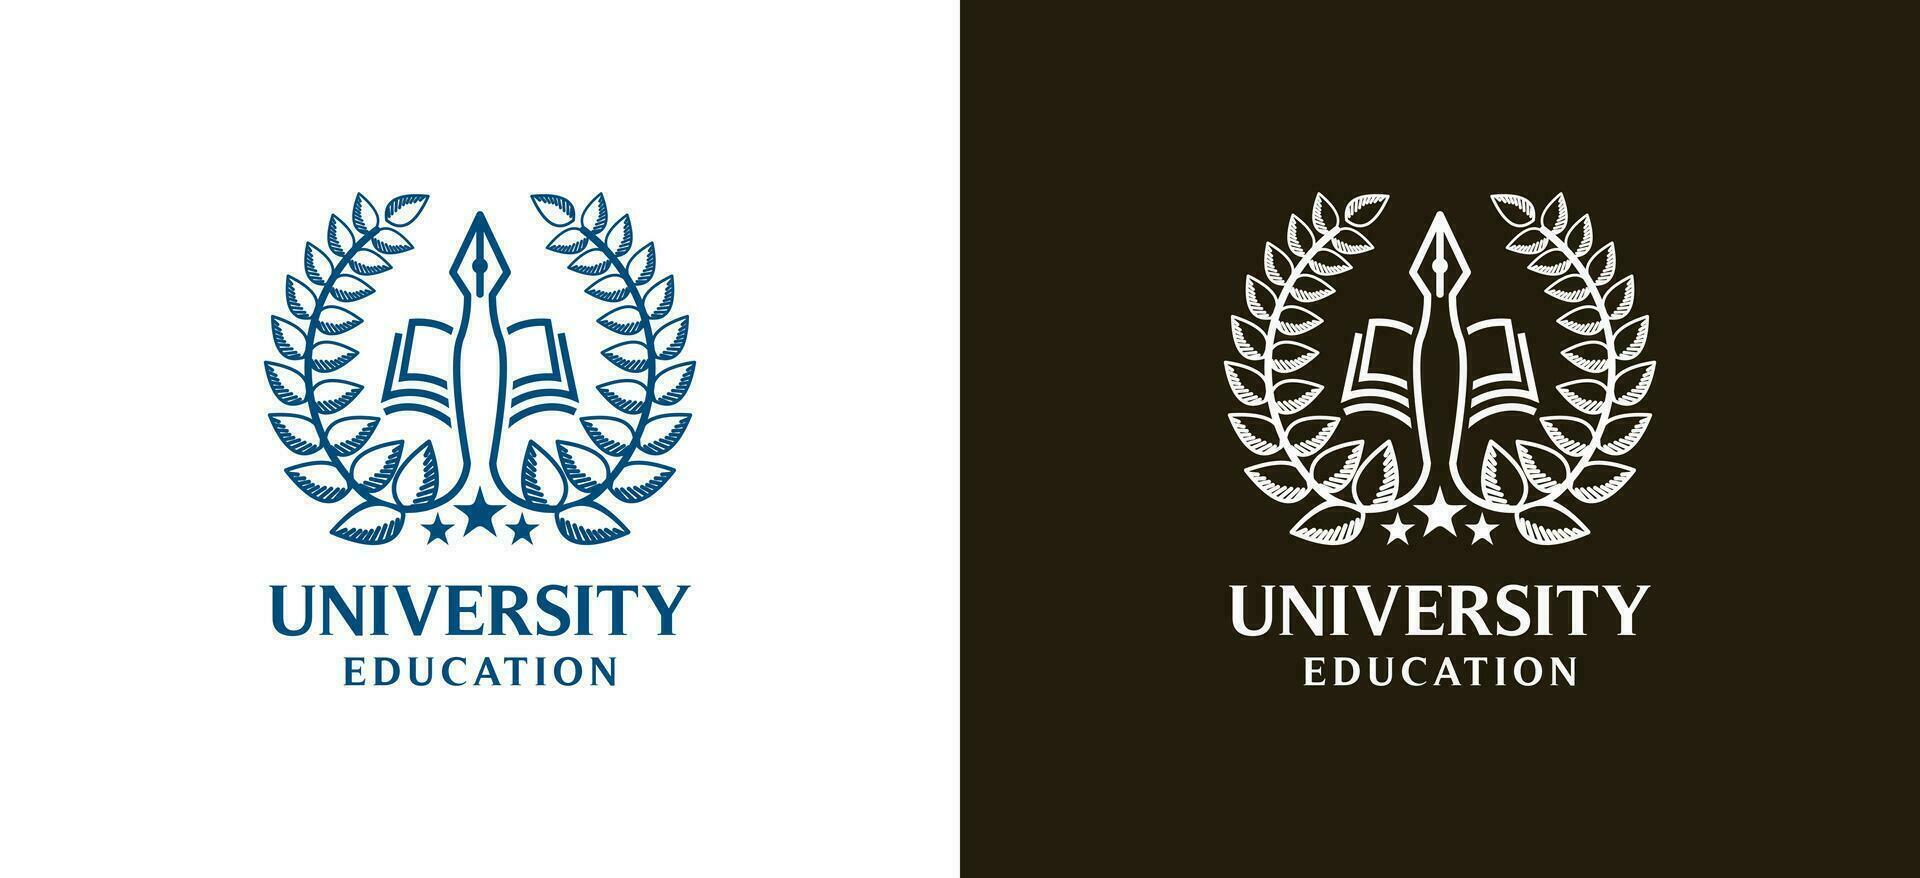 Higher education university emblem logo design using pen and book symbol line art style vector